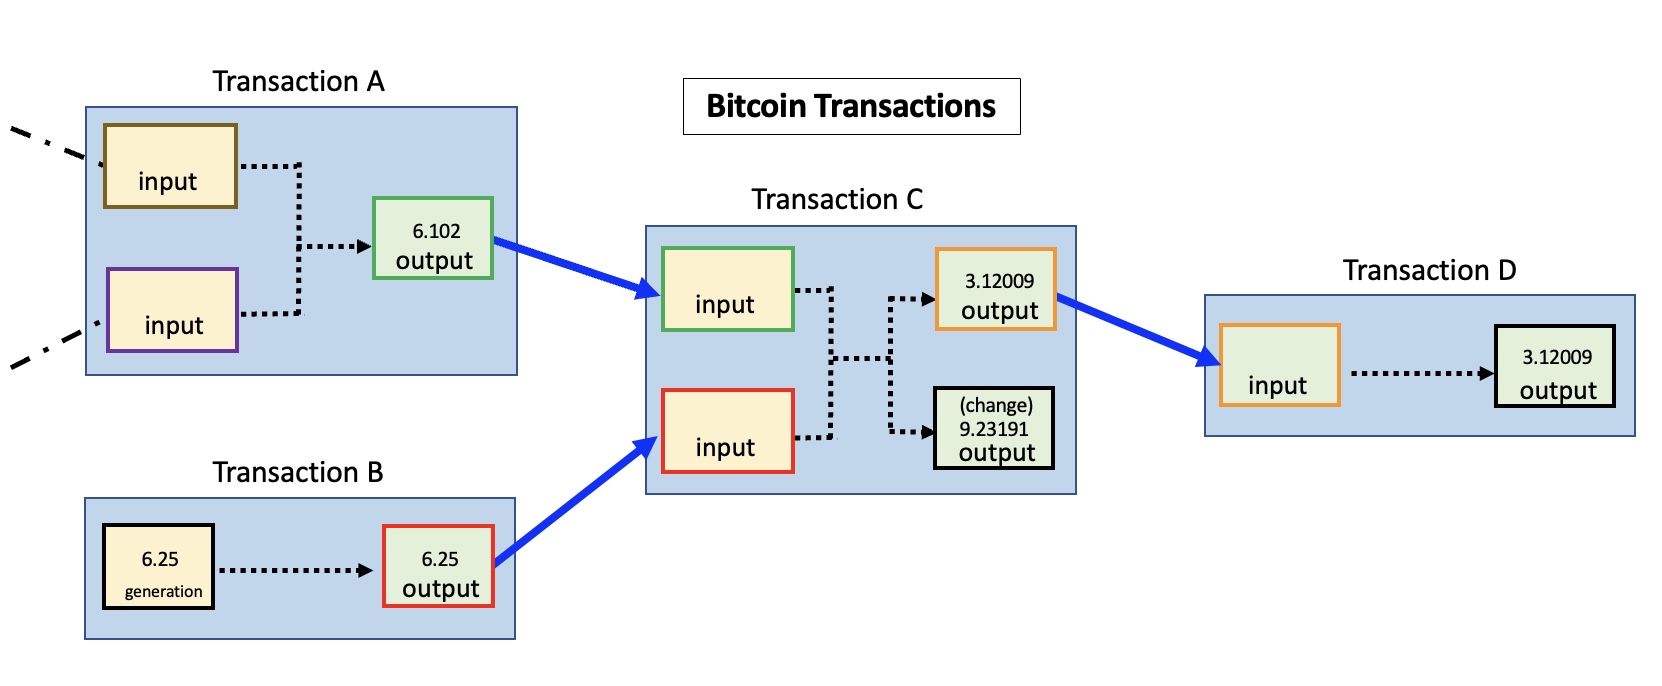 How Bitcoin Works